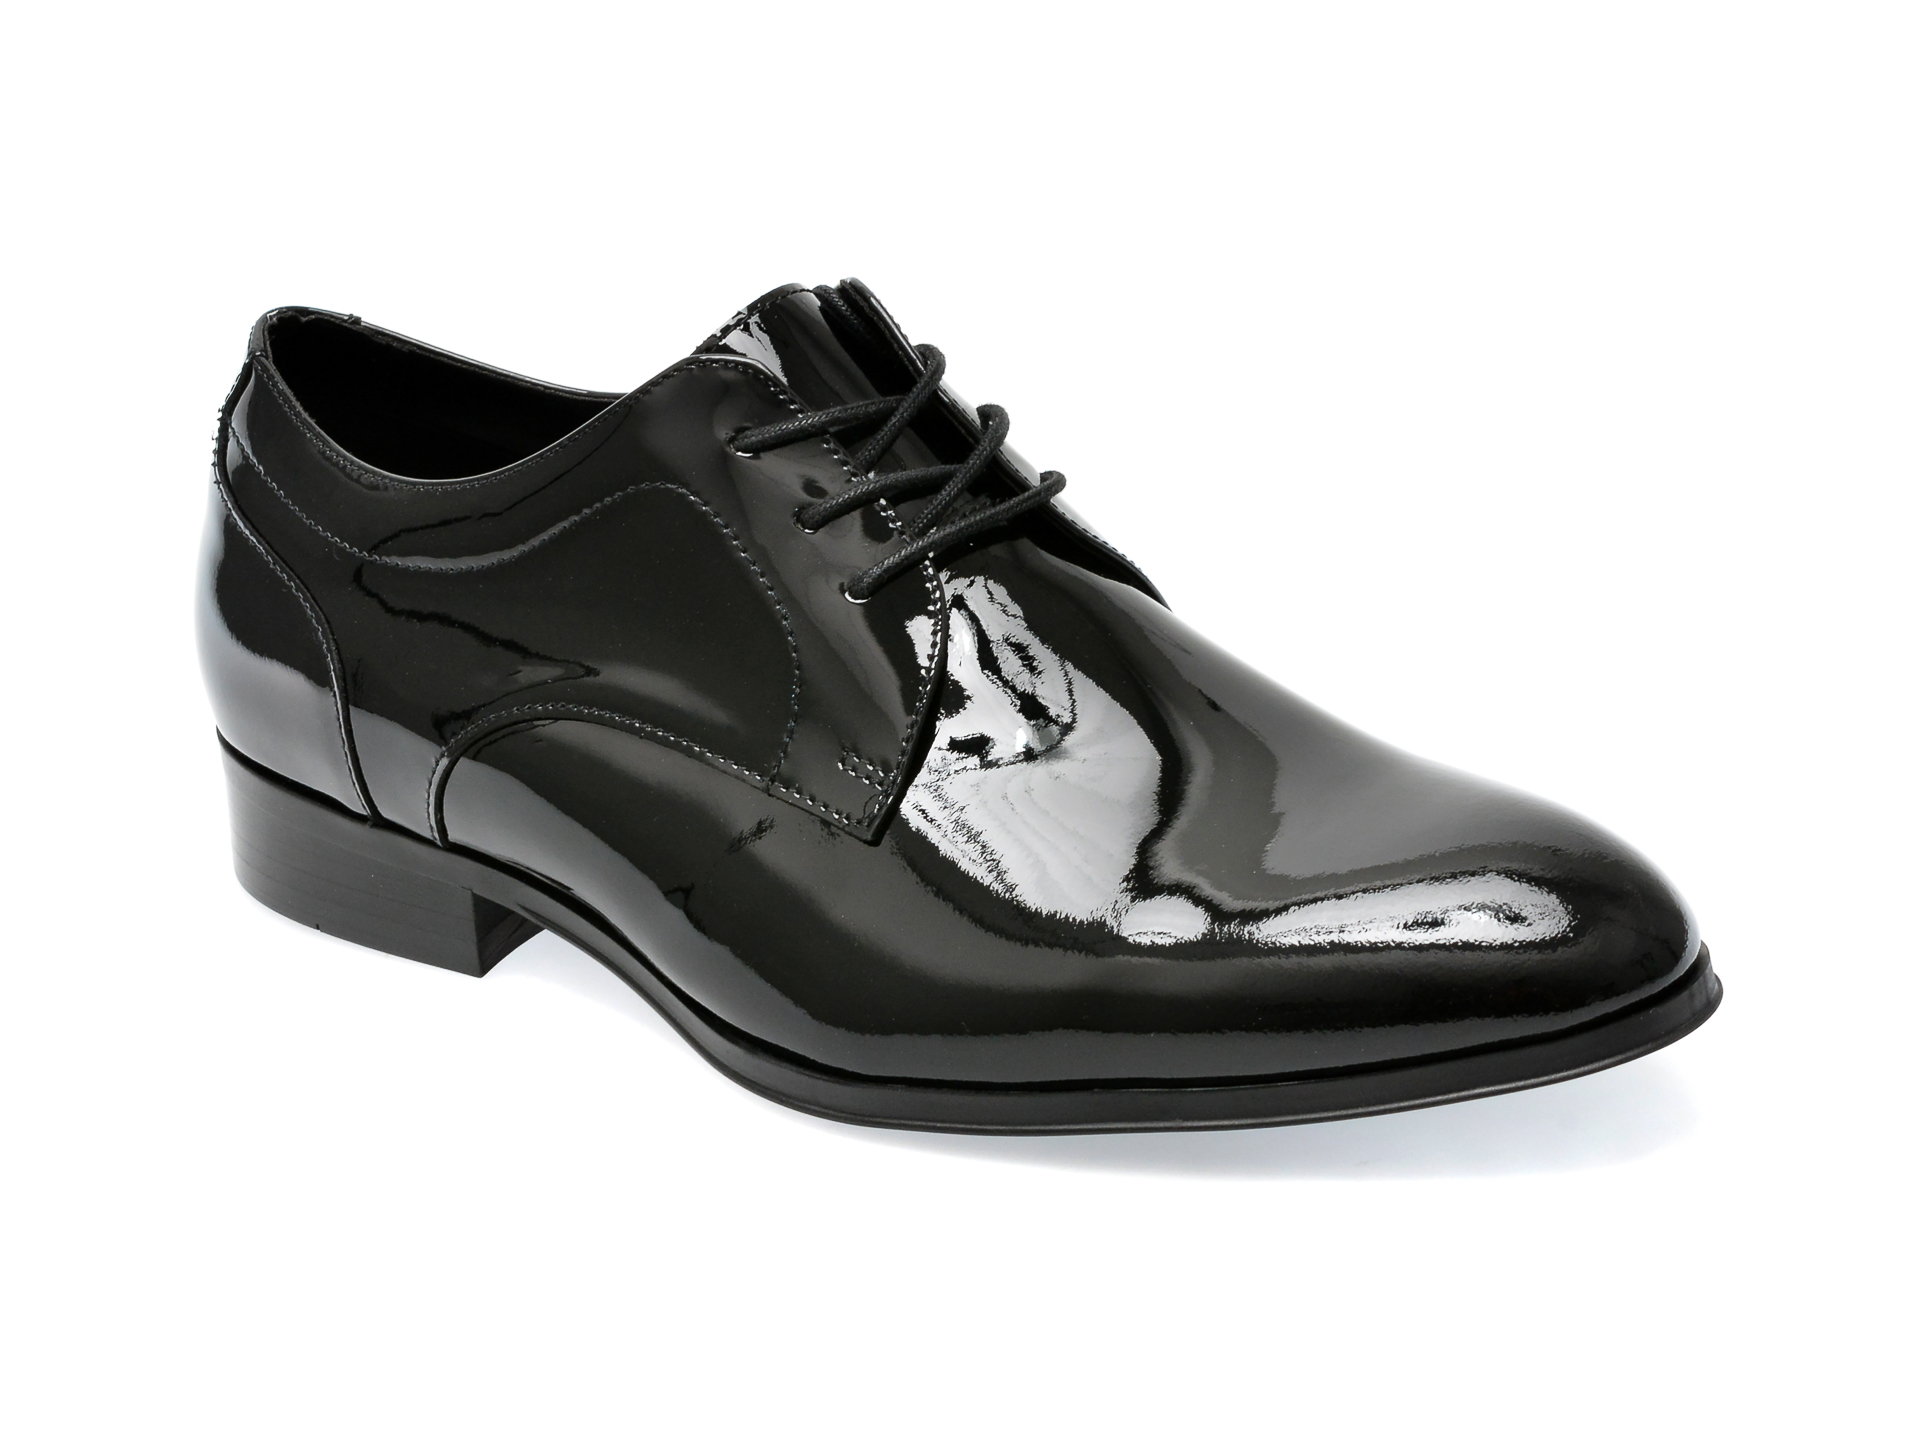 Pantofi ALDO negri, KINGSLEY004, din piele naturala lacuita /barbati/pantofi